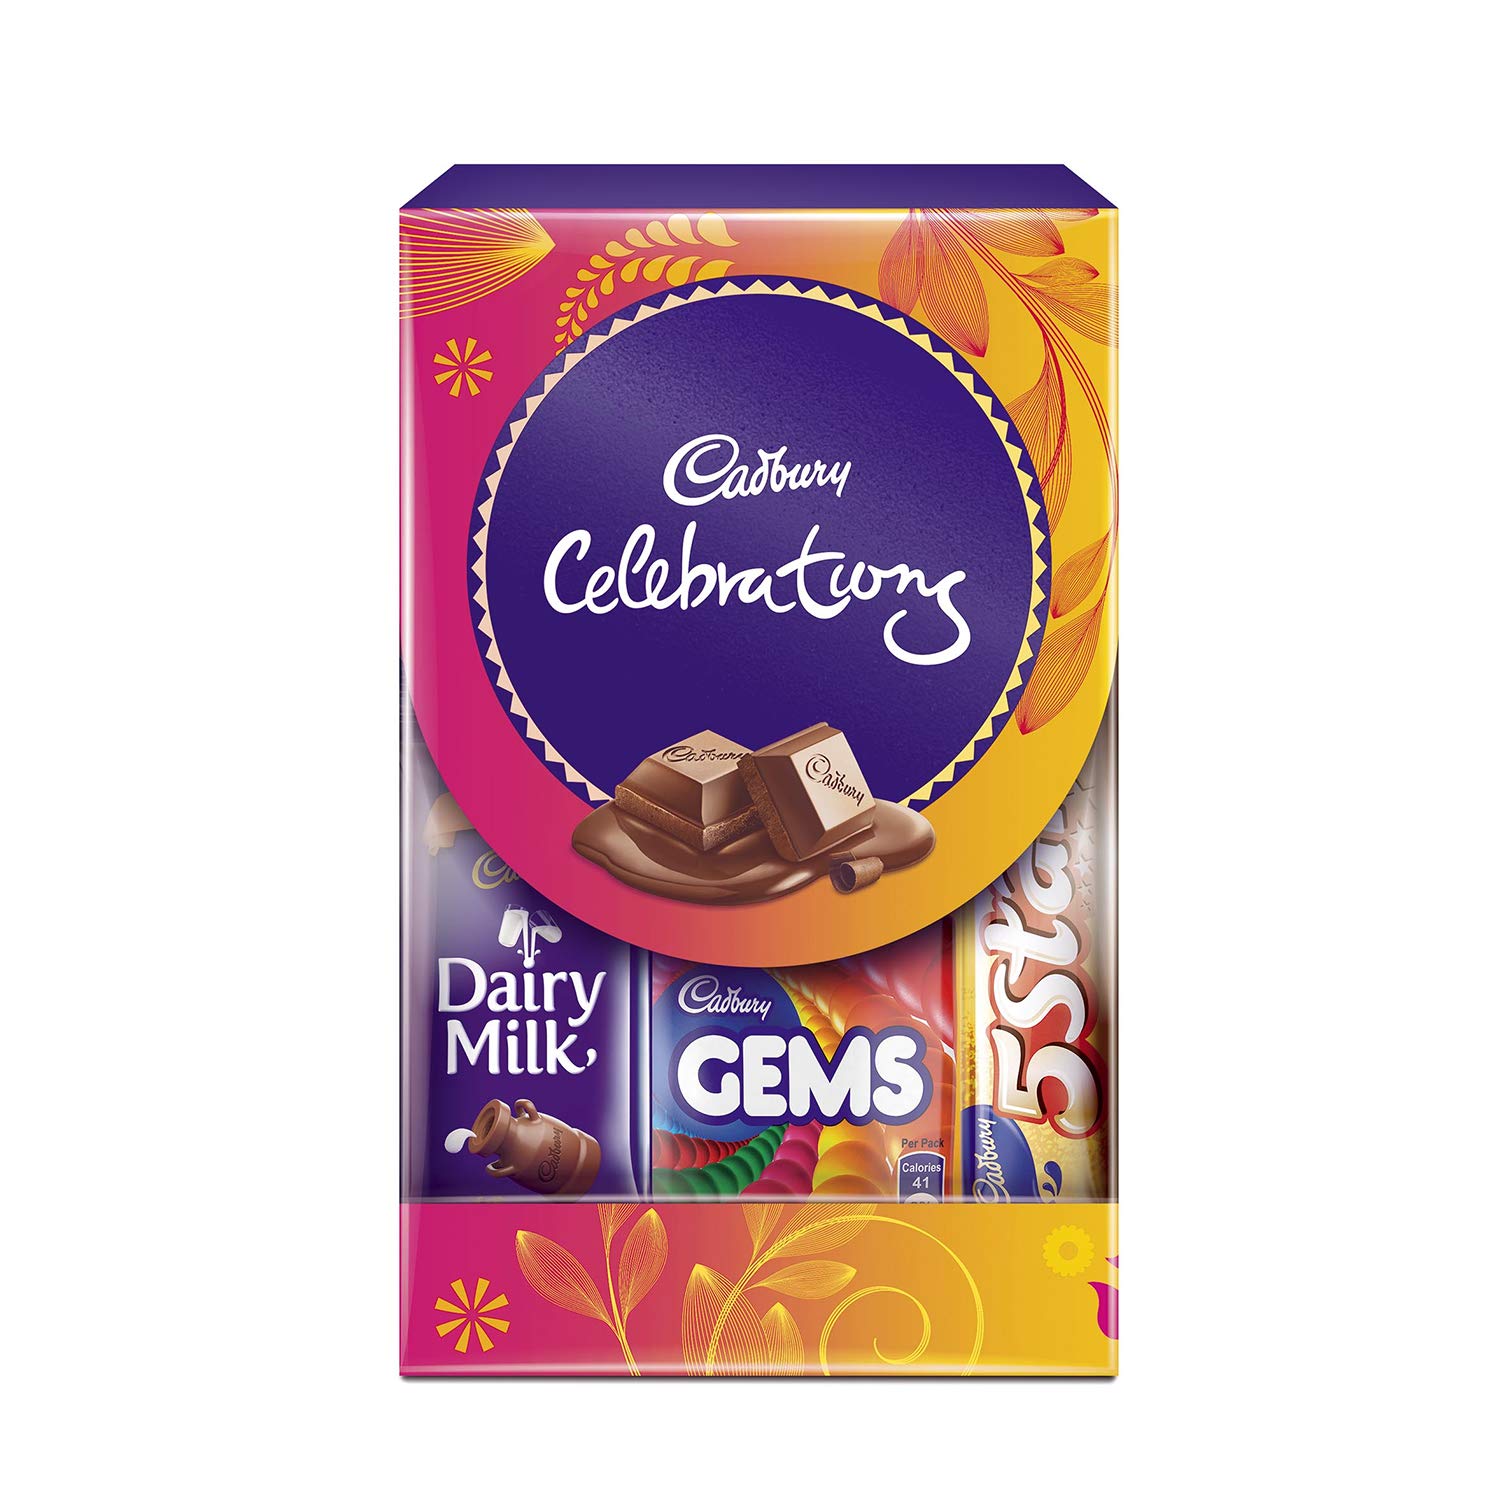 Cadbury Celebrations Treasure Basket Chocolate Gift Pack - Pack of 2 Price  - Buy Online at Best Price in India